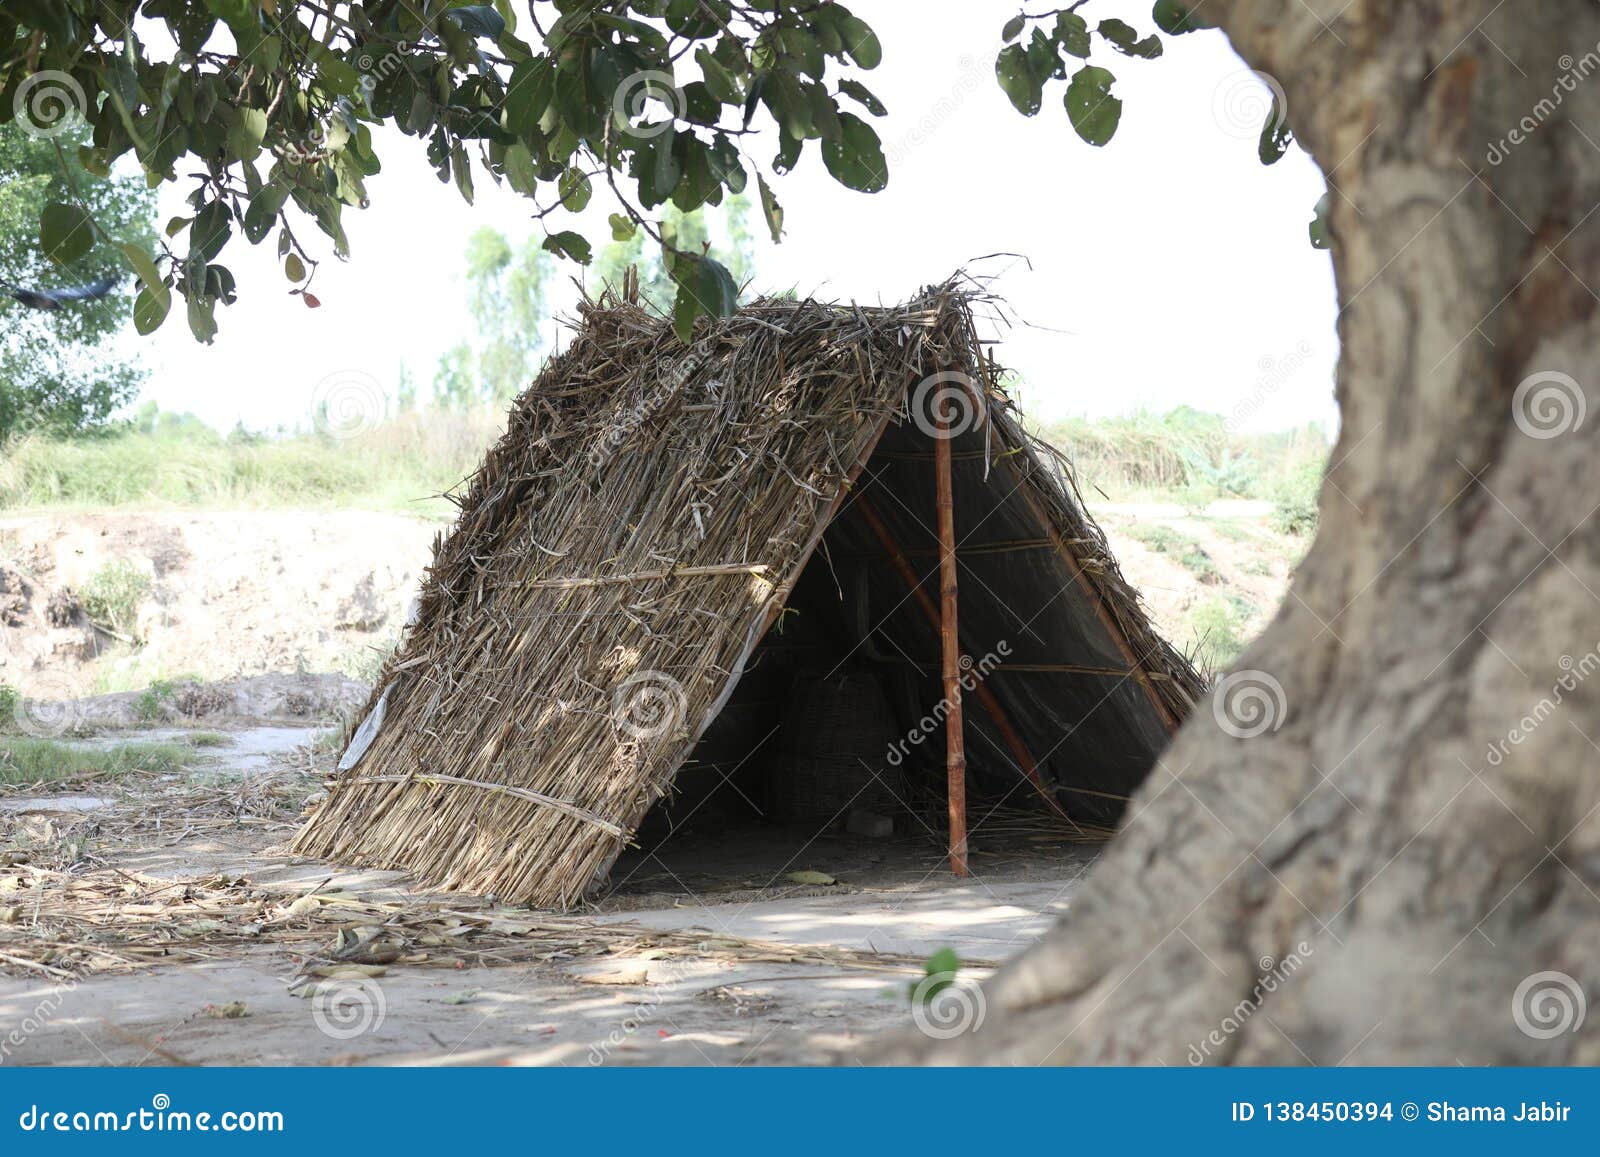 hut made of husk and bamboos